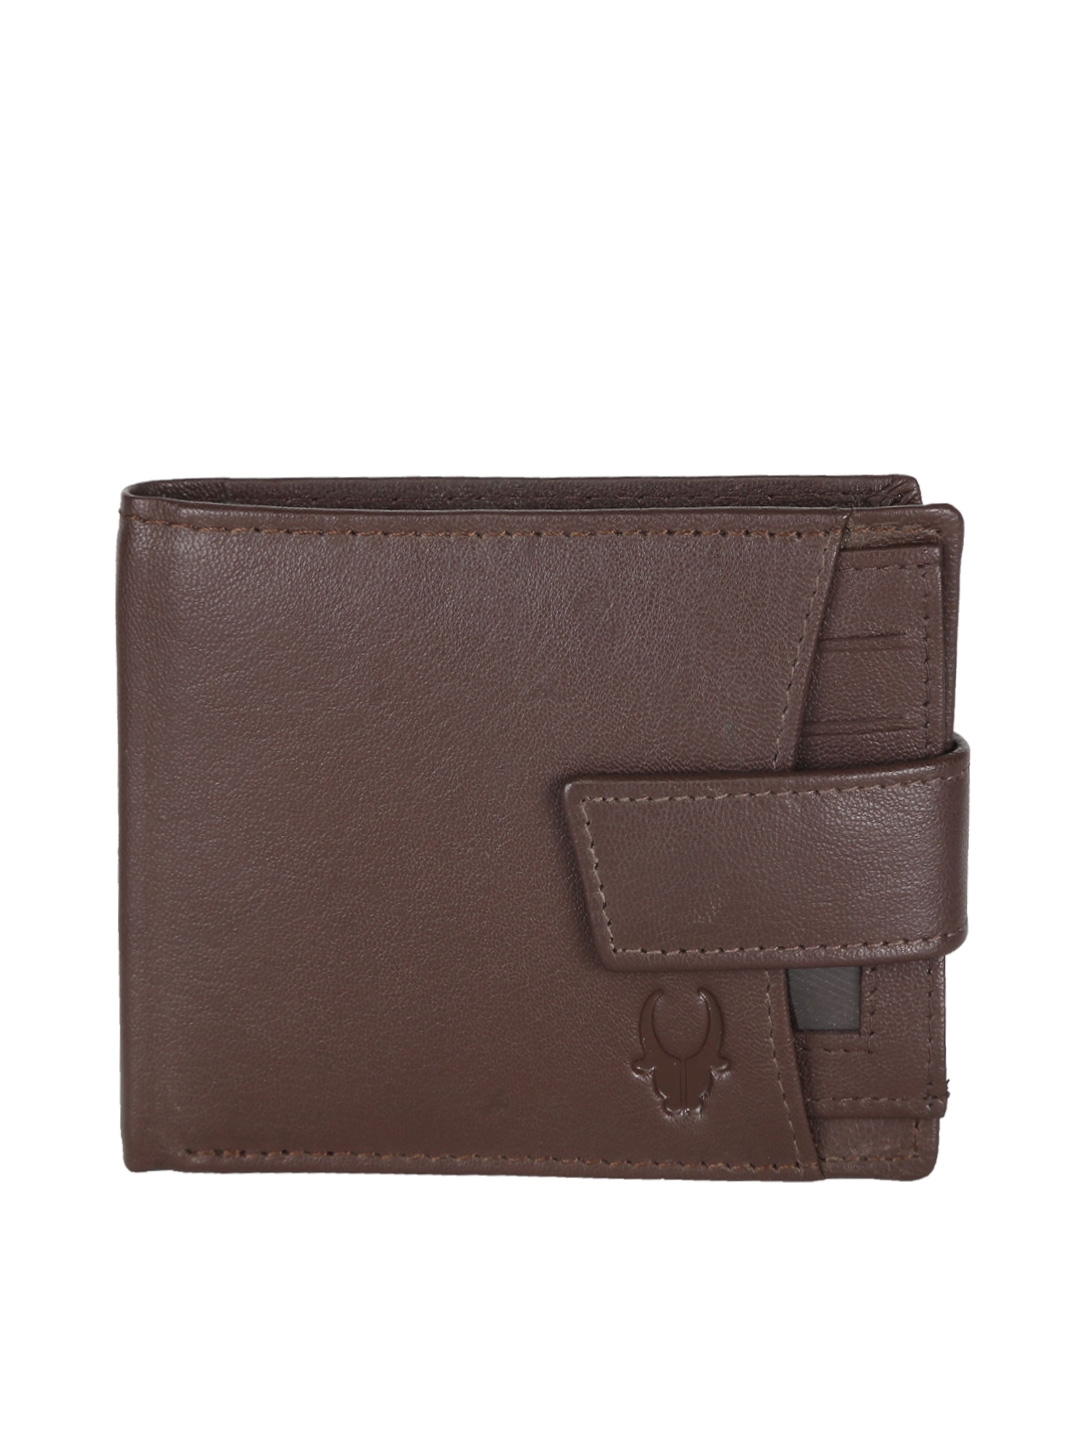 Buy WildHorn Men Brown Genuine Leather Wallet - Wallets for Men 1207530 ...